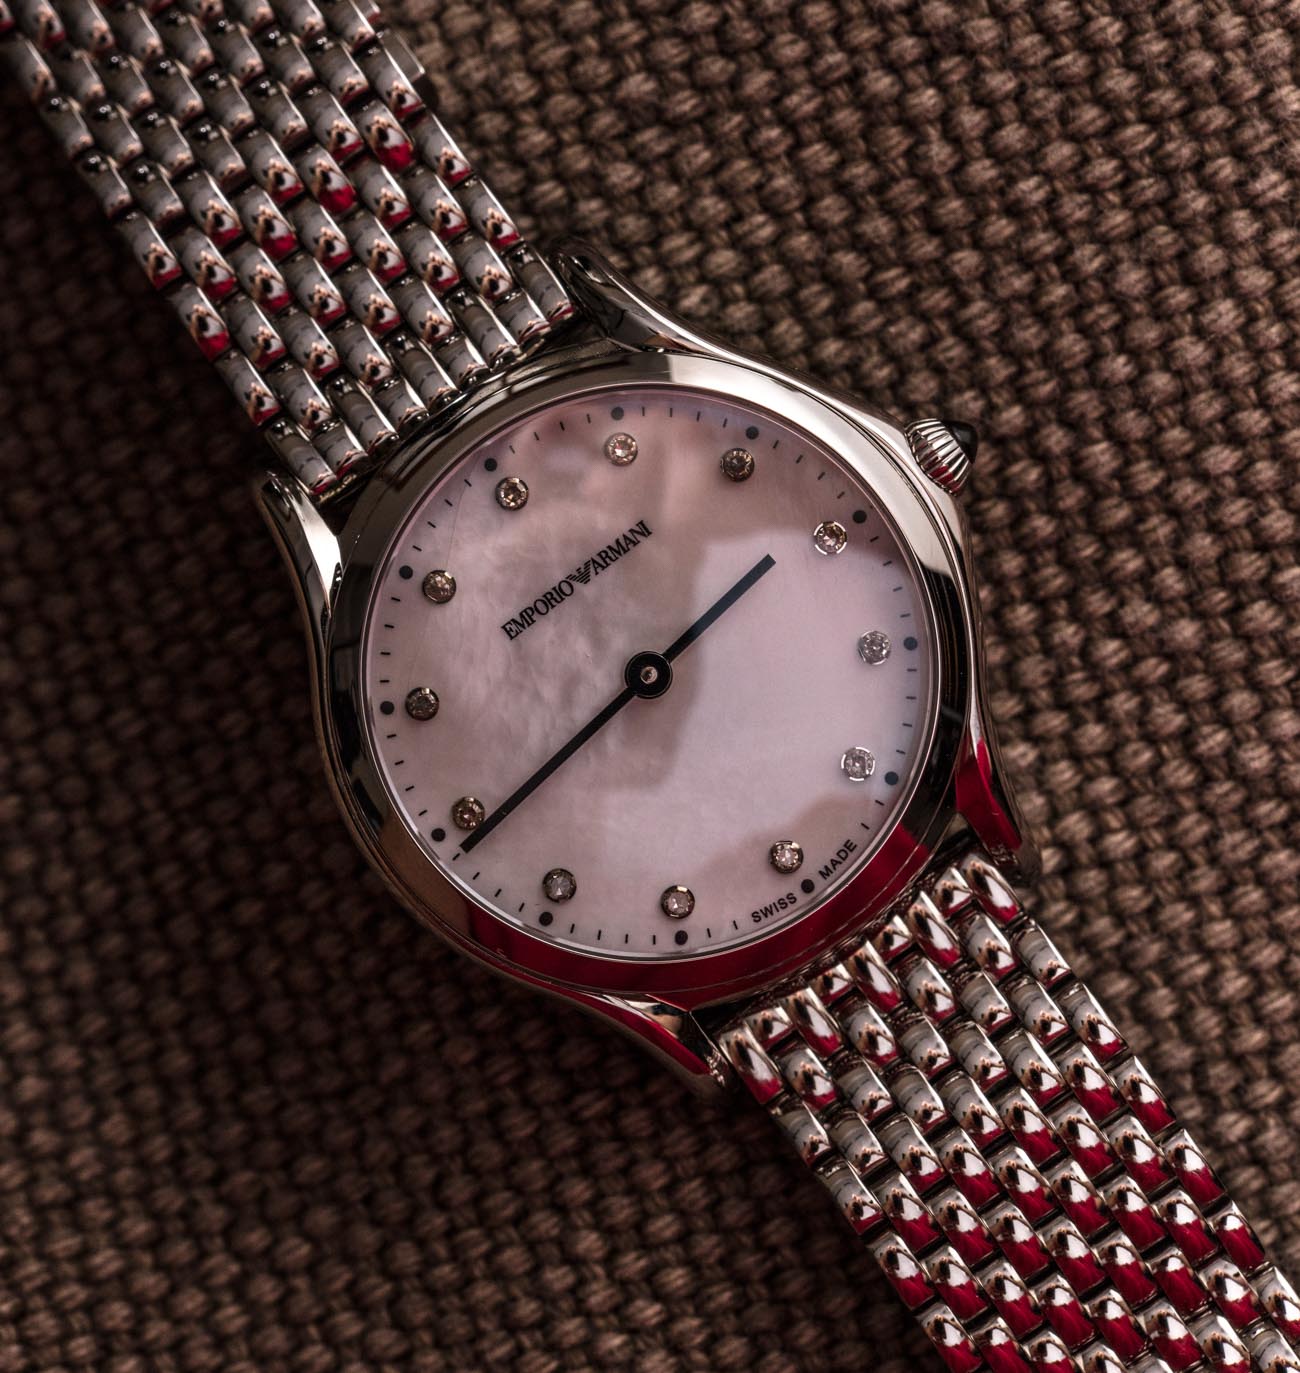 Emporio Armani Swiss Made Women's ARS7501 Watch Hands-On | aBlogtoWatch